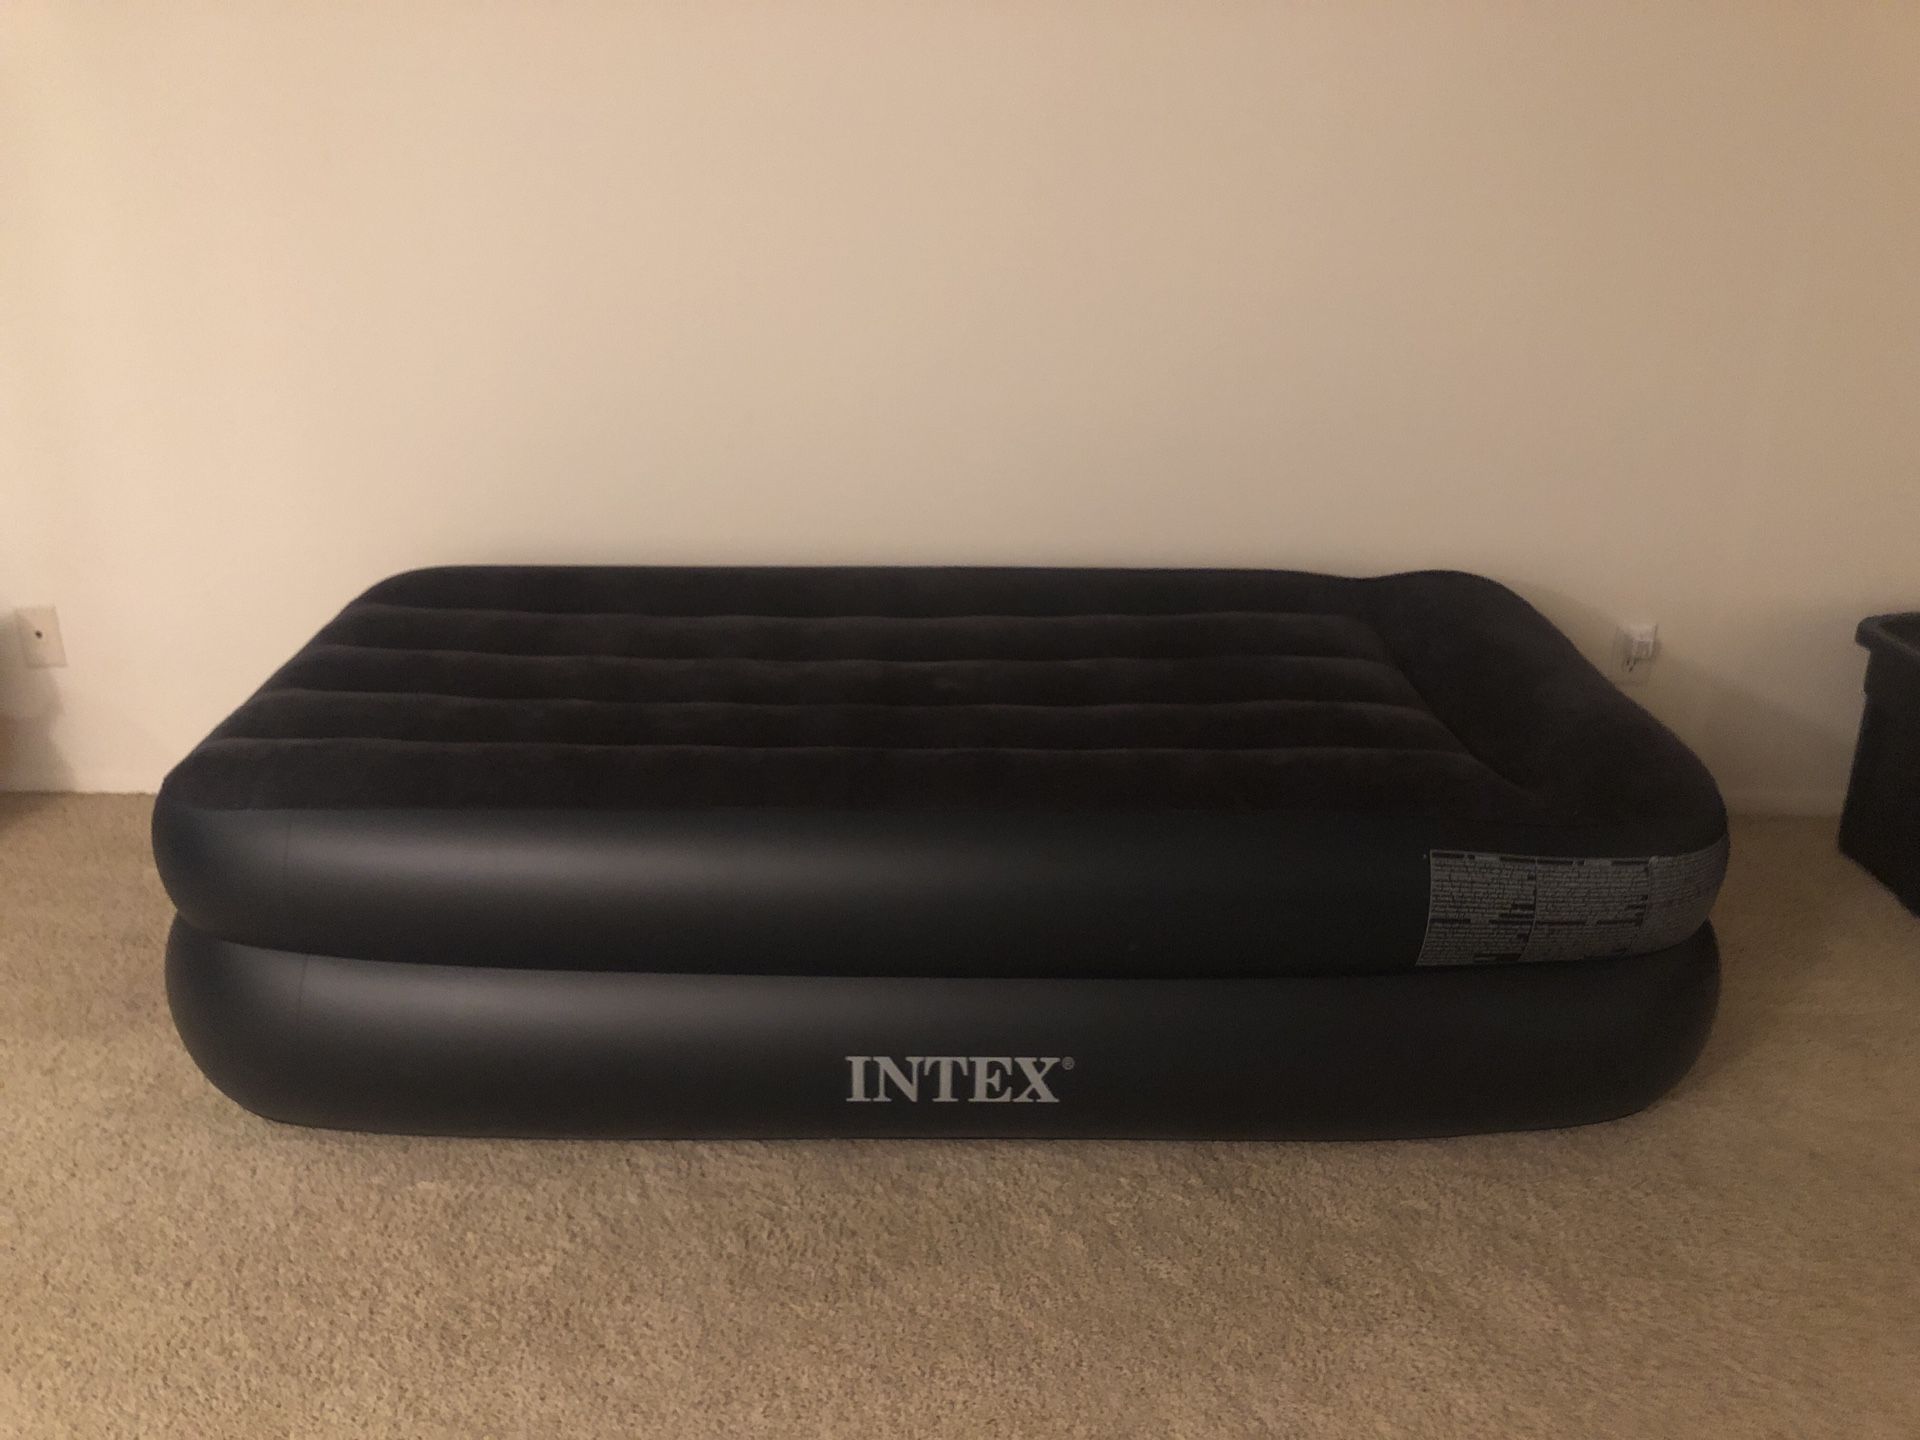 Intel air mattress full size built in electric pump